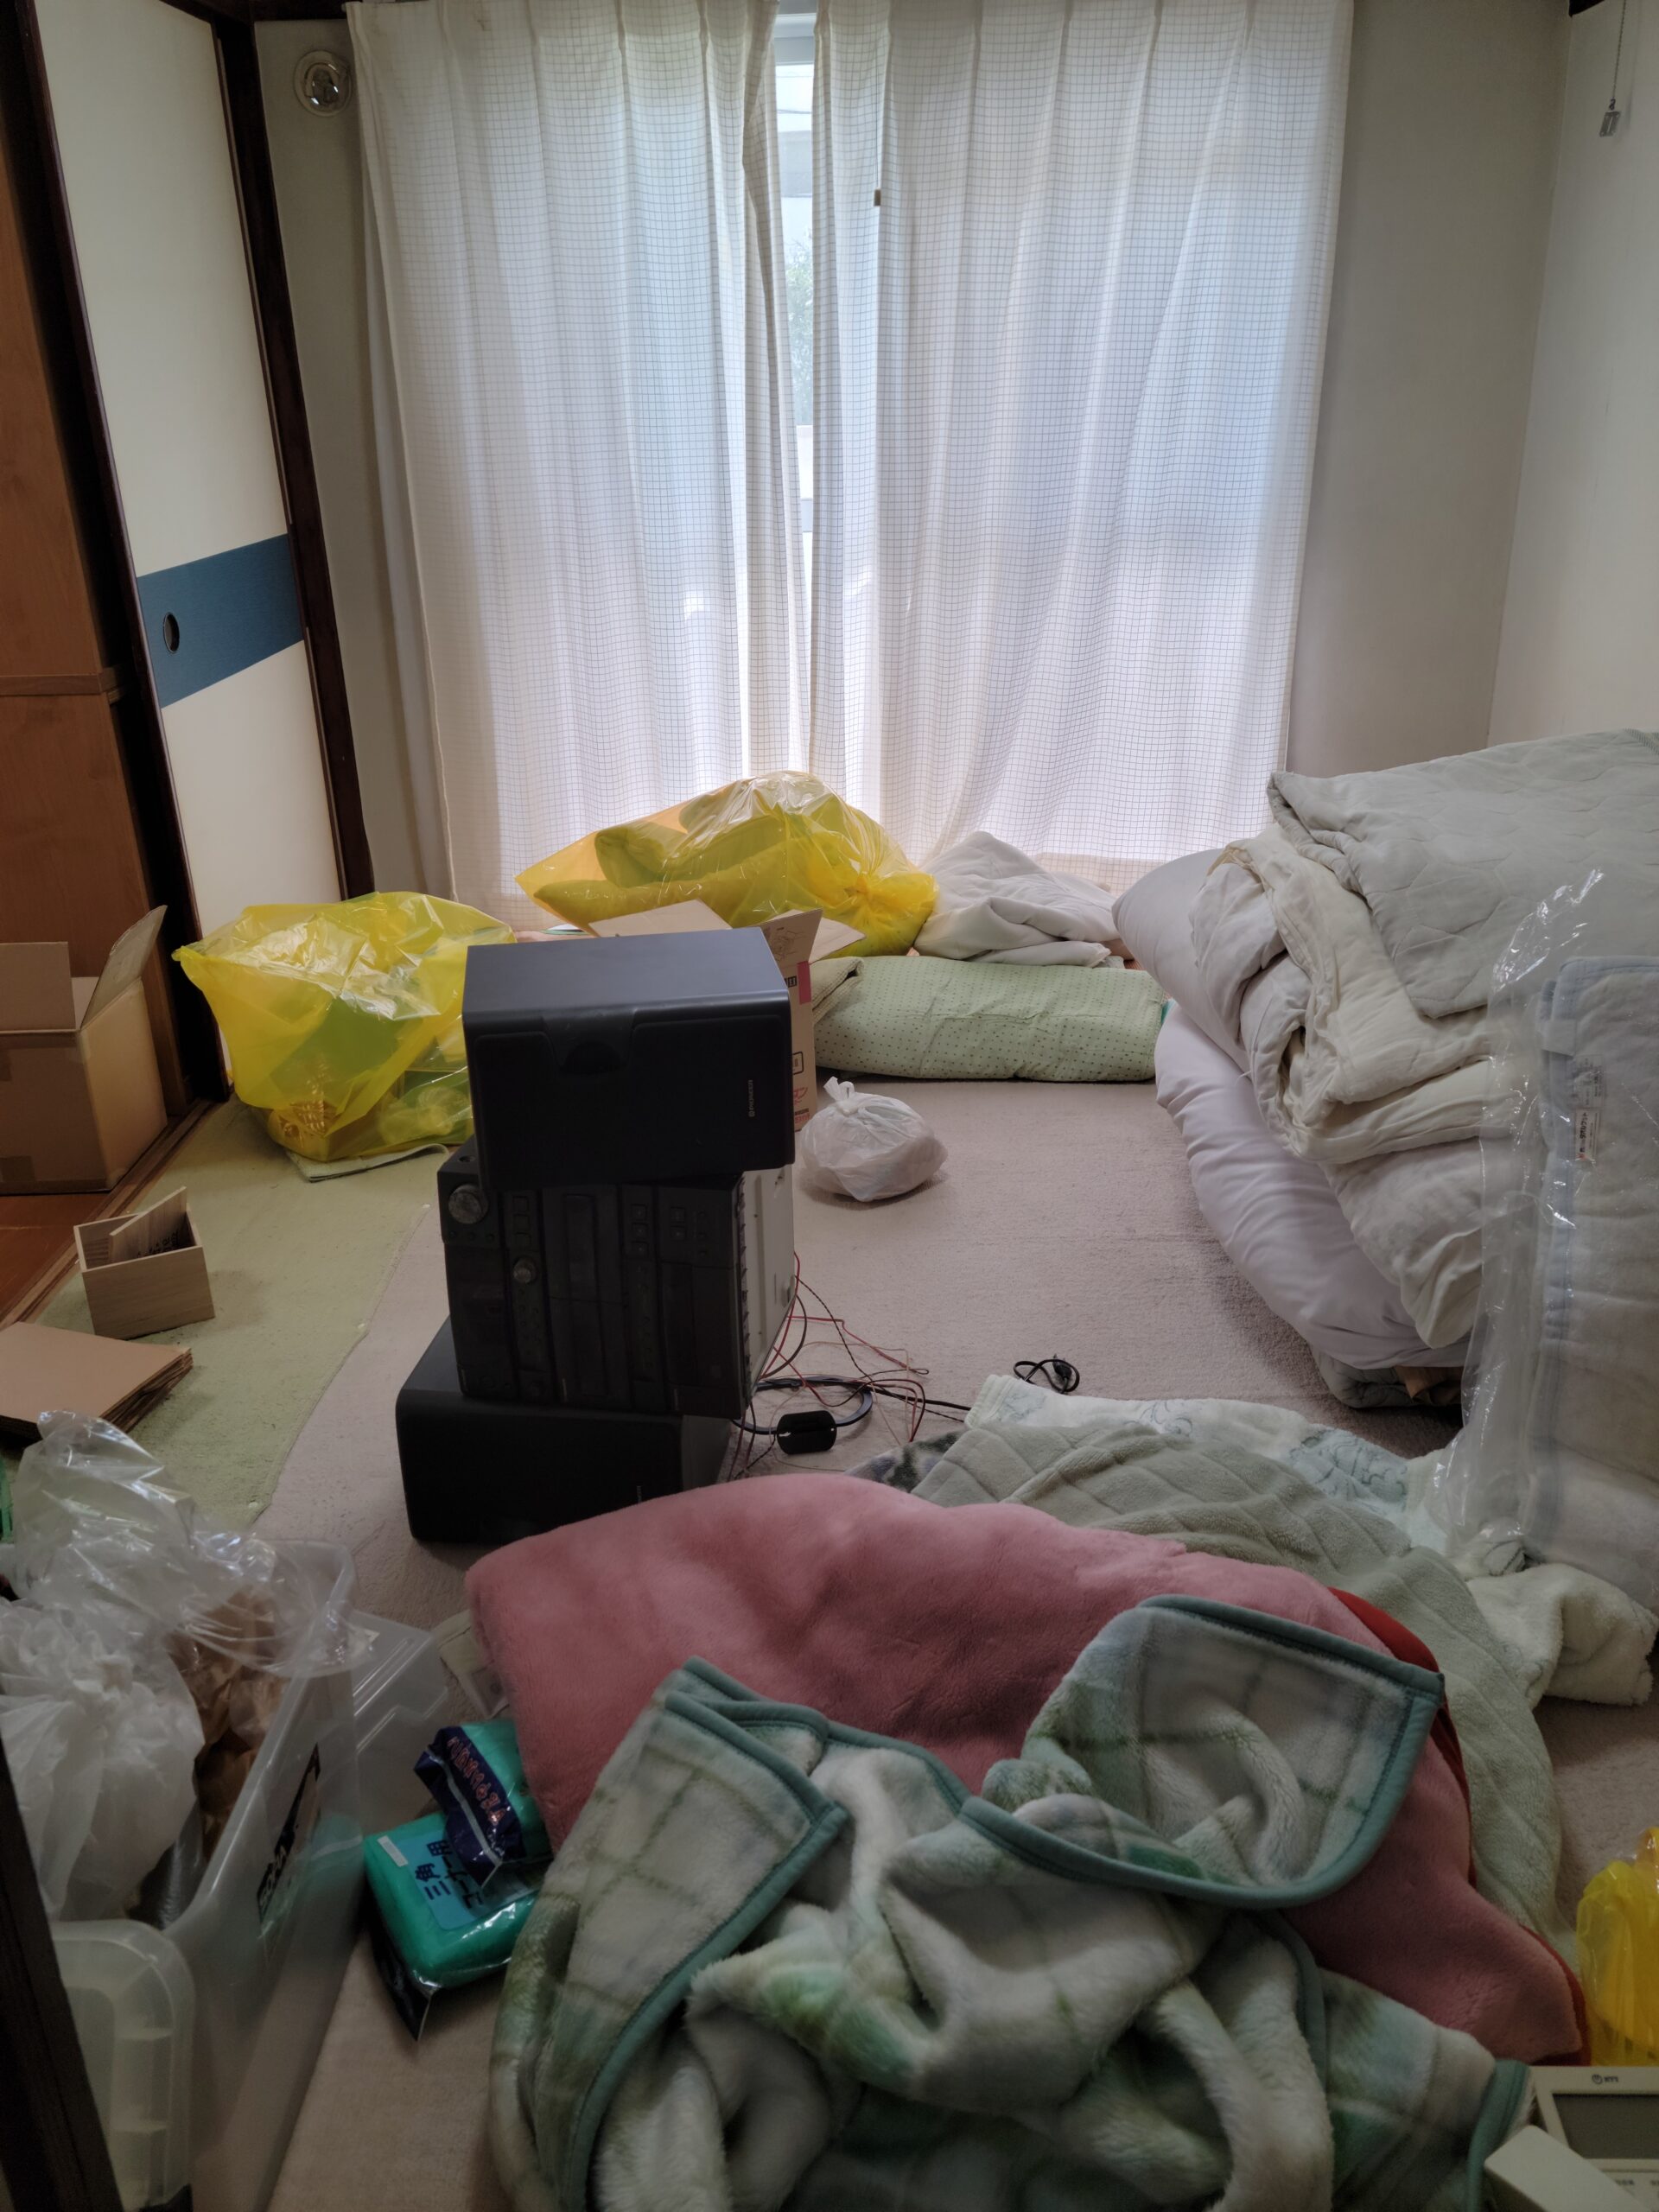 東京都府中市 部屋の片付けと不用品回収